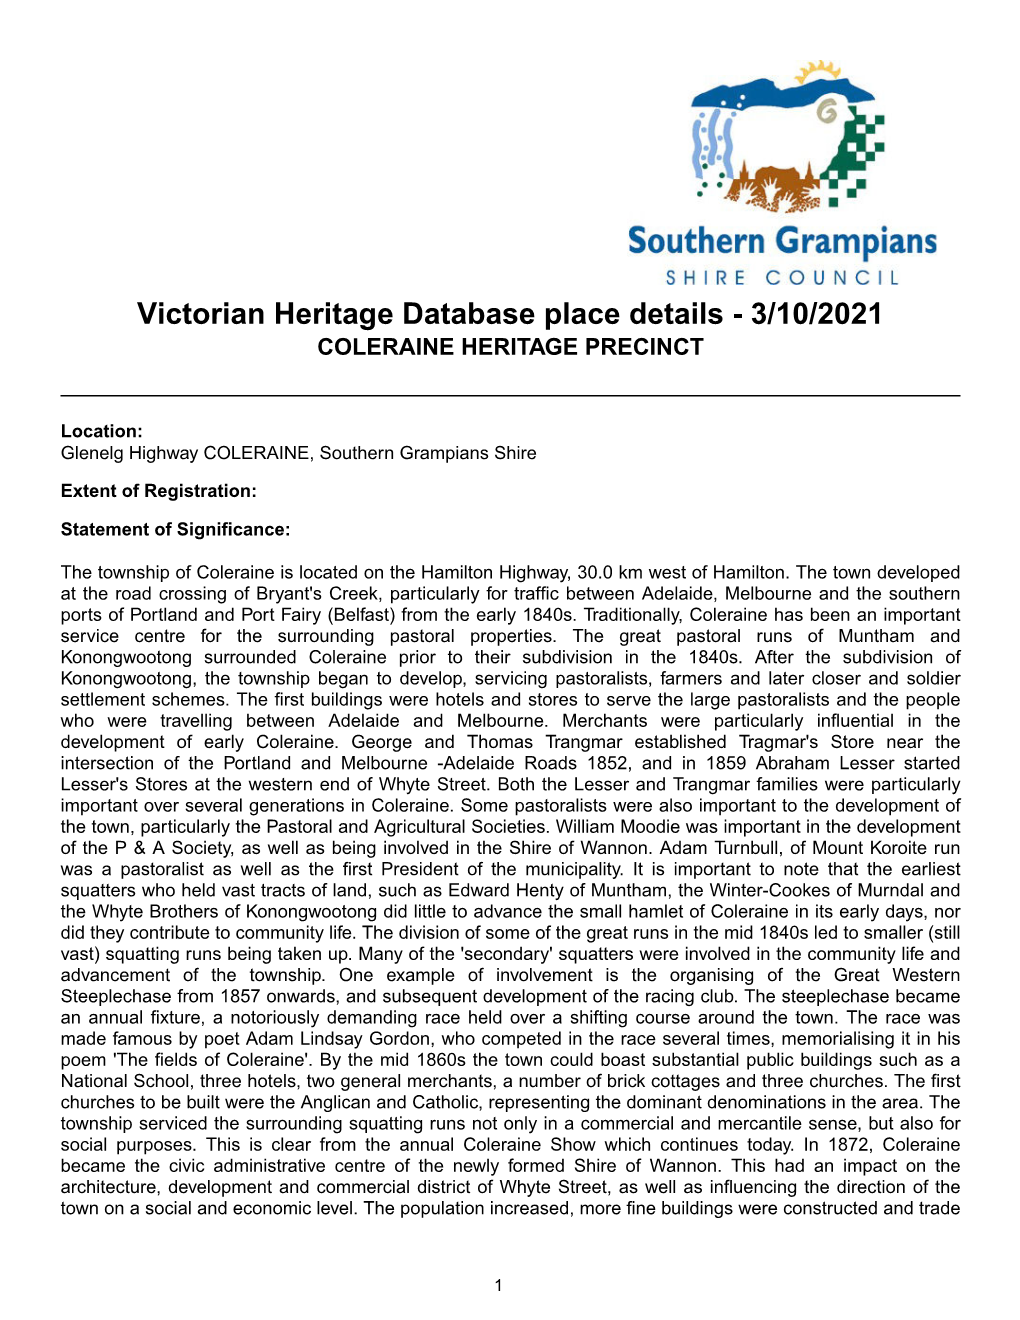 Victorian Heritage Database Place Details - 3/10/2021 COLERAINE HERITAGE PRECINCT